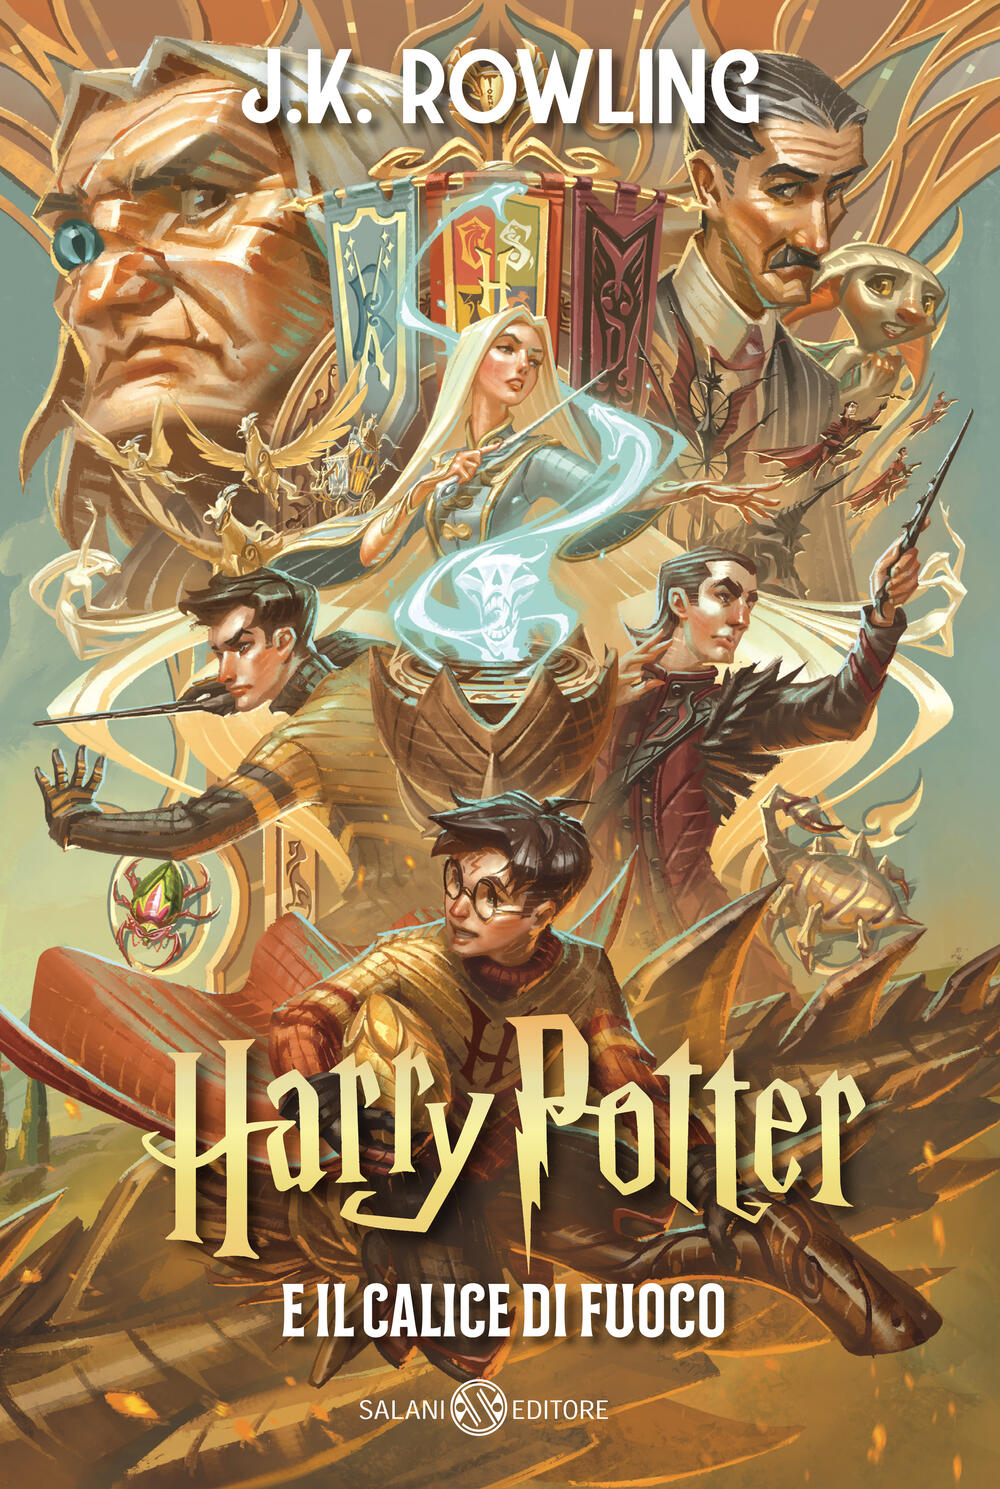 Harry Potter e il Prigioniero di Azkaban - Papercut Minalima - J. K. Rowling